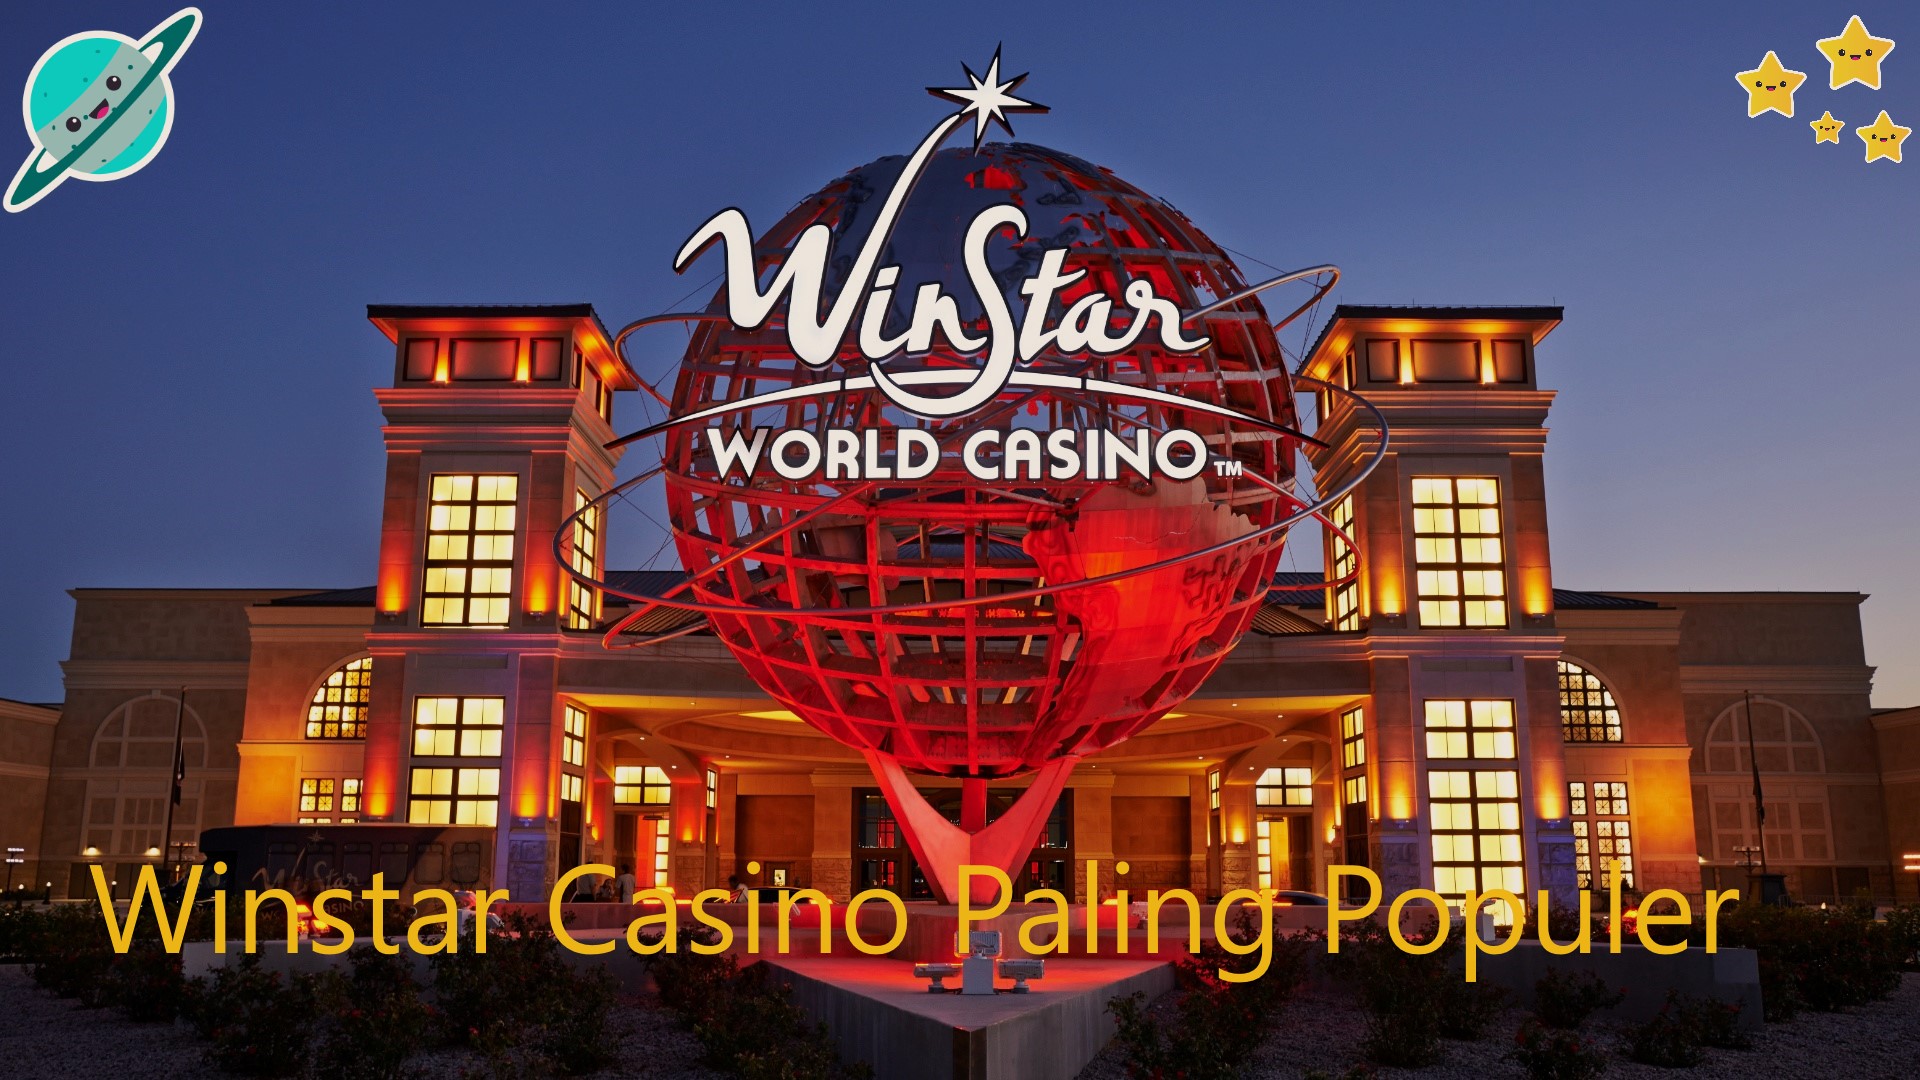 Winstar Casino Paling Populer